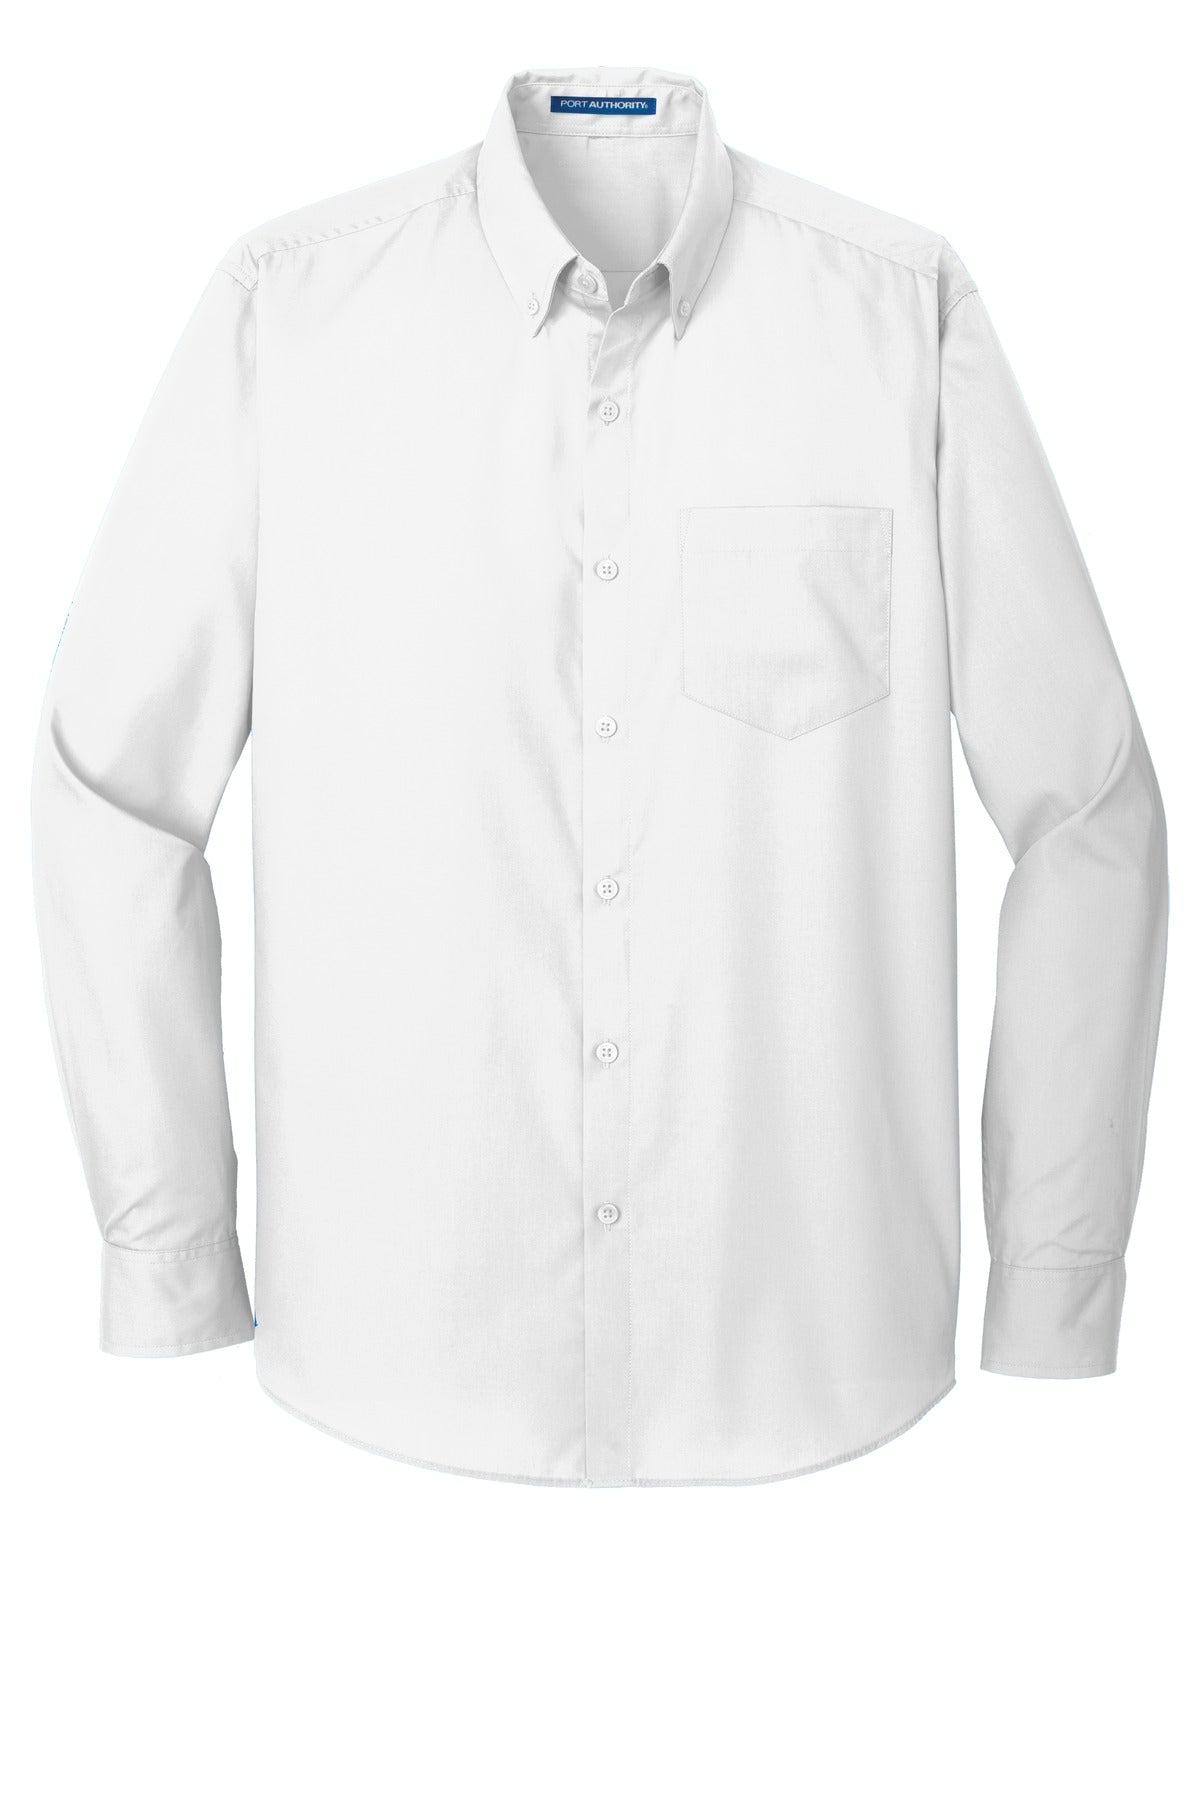 BGR - Port Authority Tall Long Sleeve Carefree Poplin Shirt. TW100